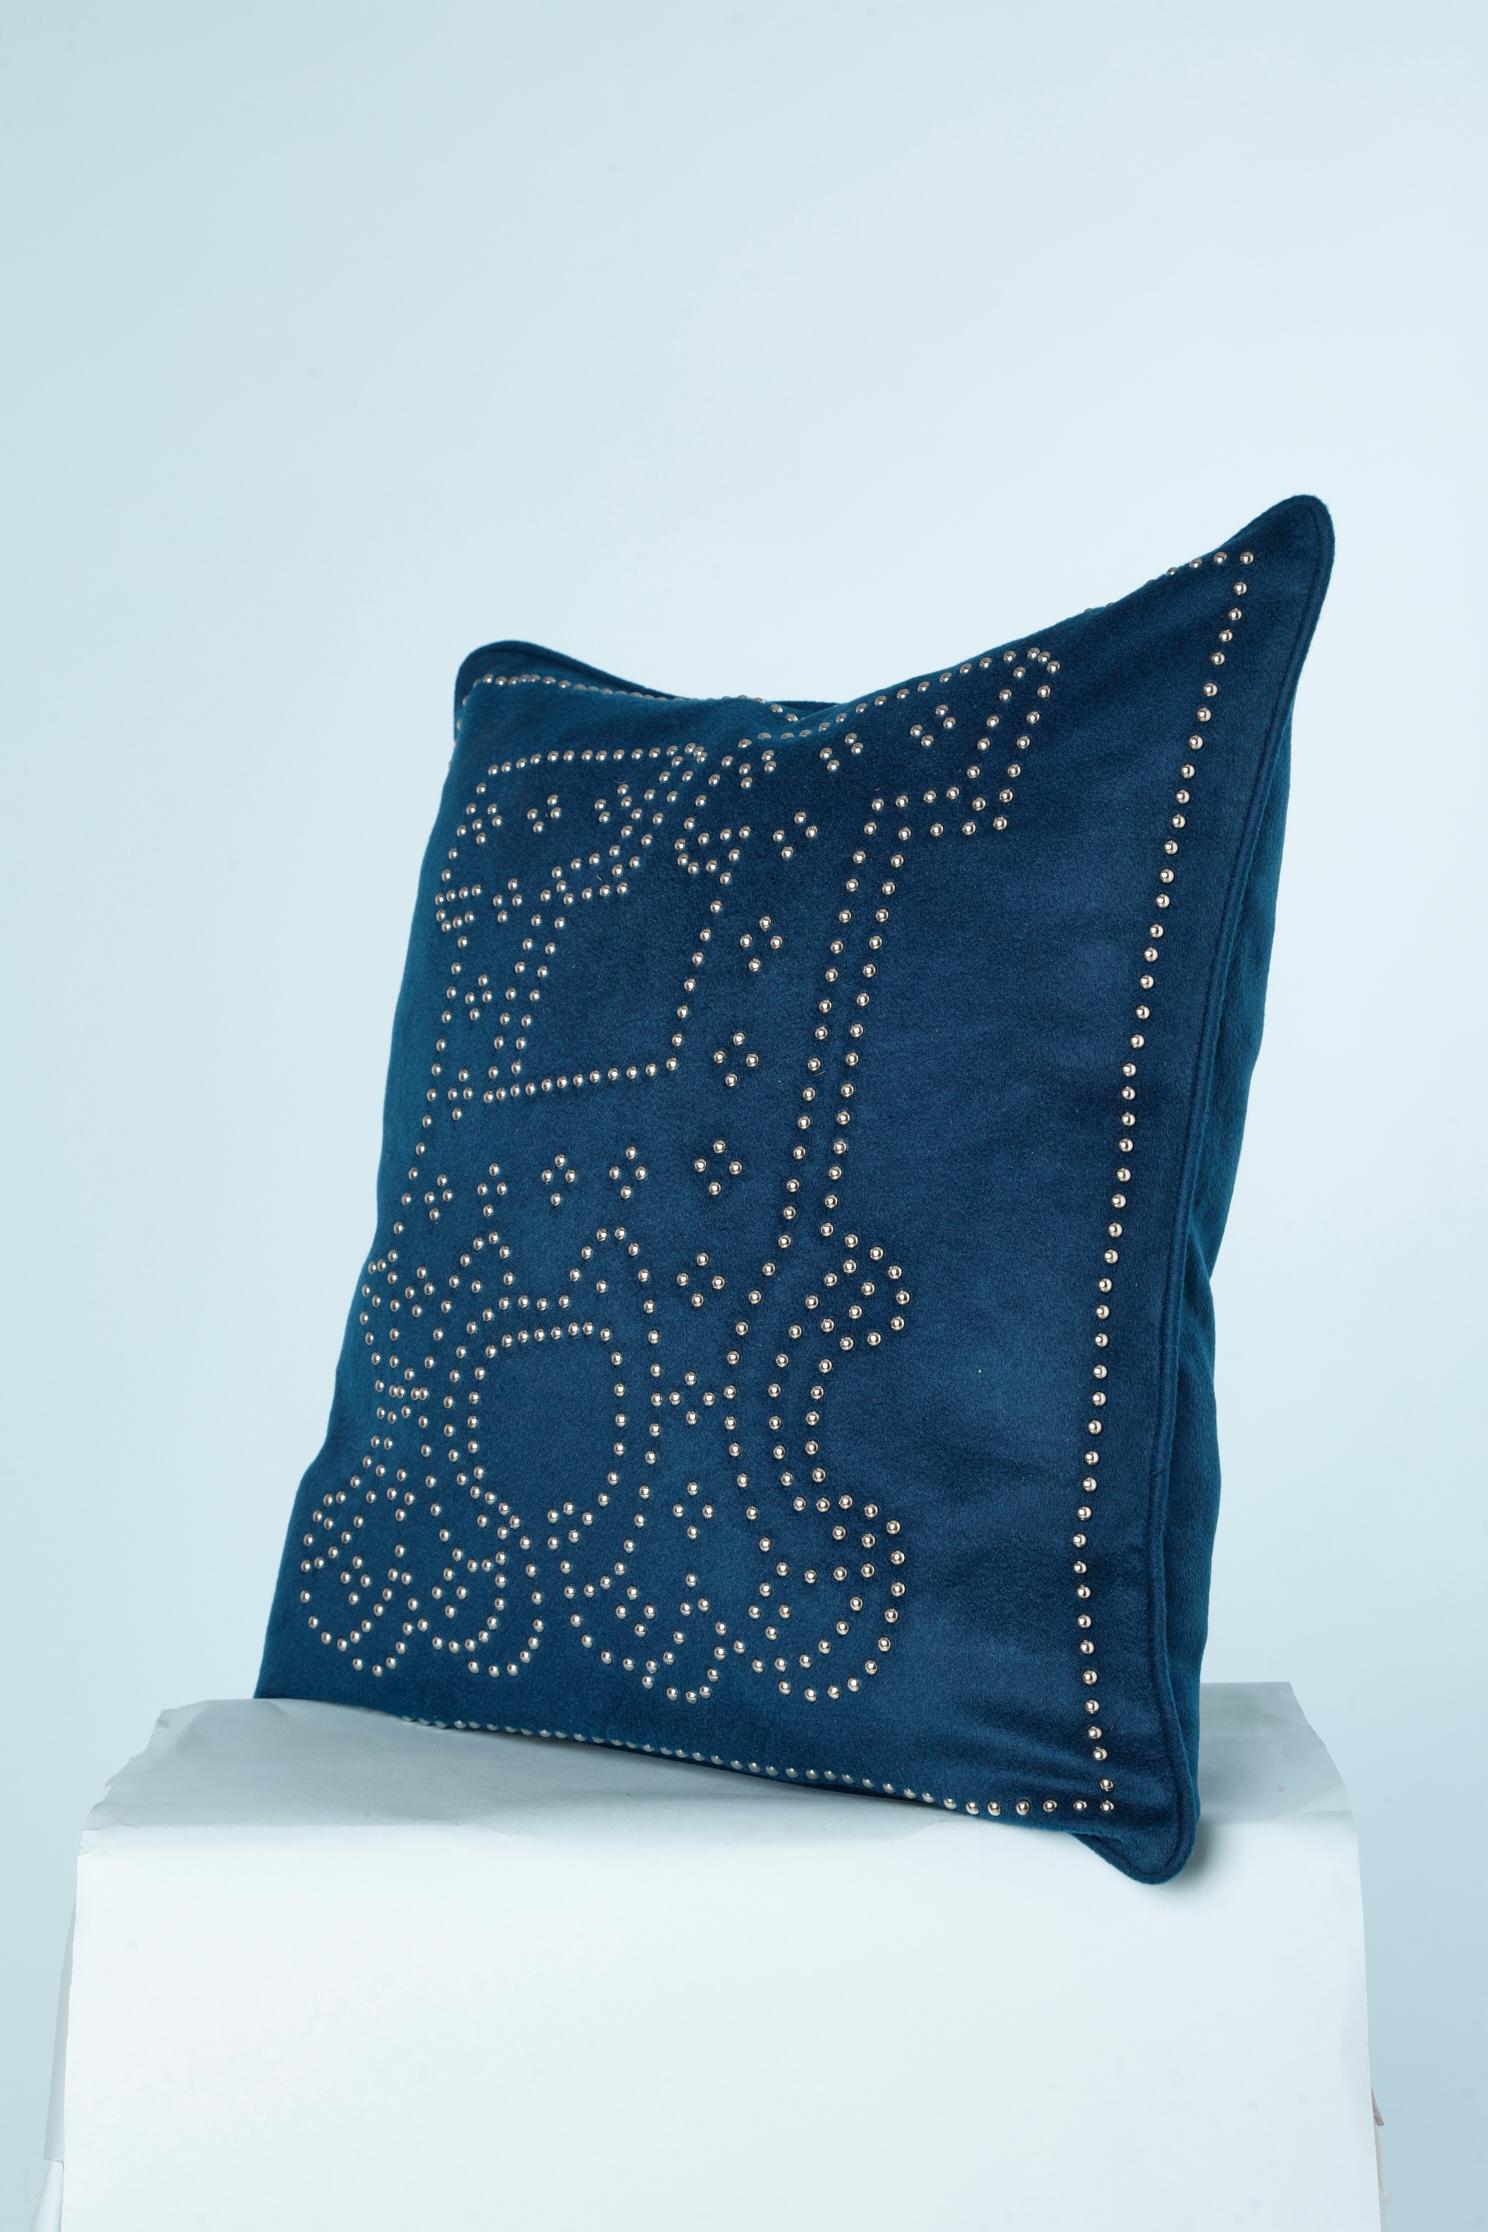 hermes pillow blue